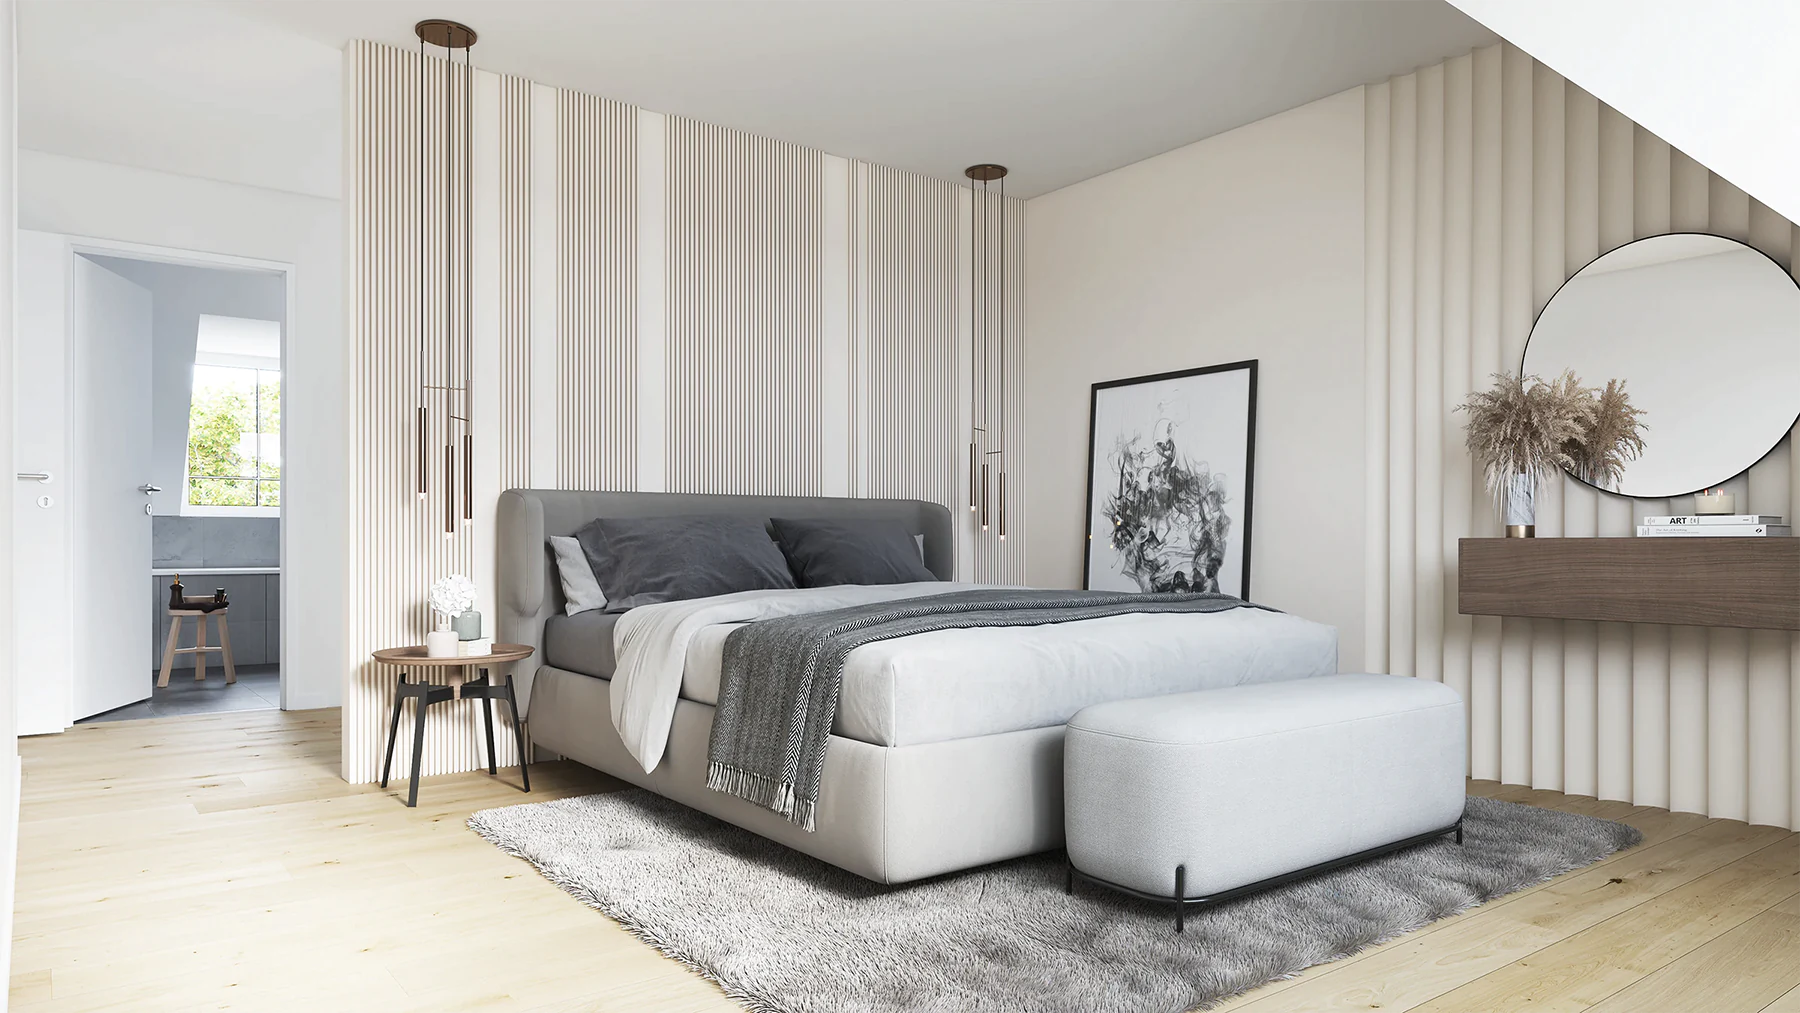 architectural-rendering-bedroom-munich